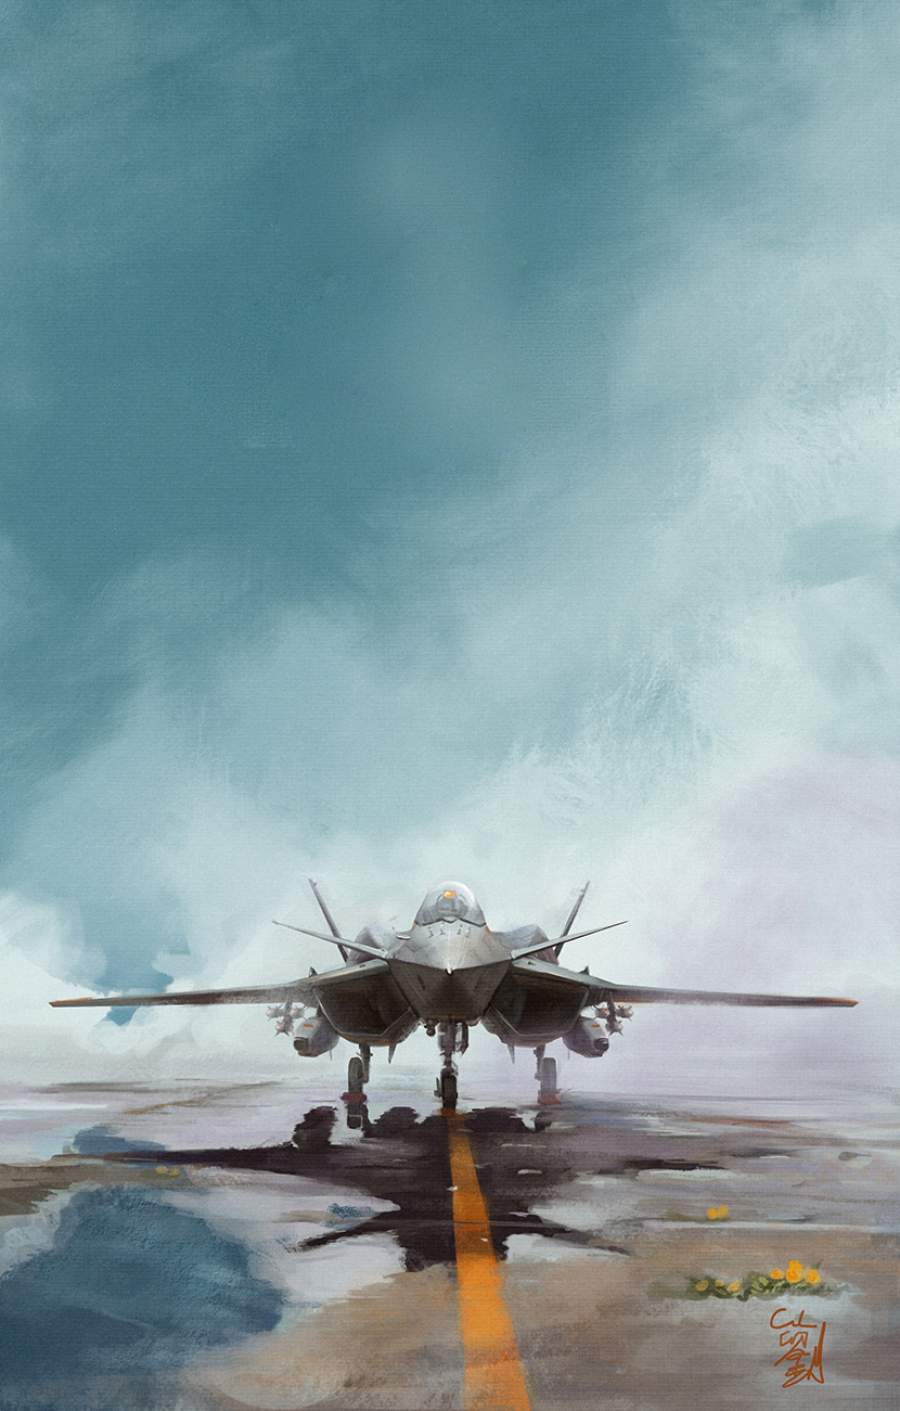 Dassault Rafale Fighter Jet Wallpaper, iPhone Wallpaper